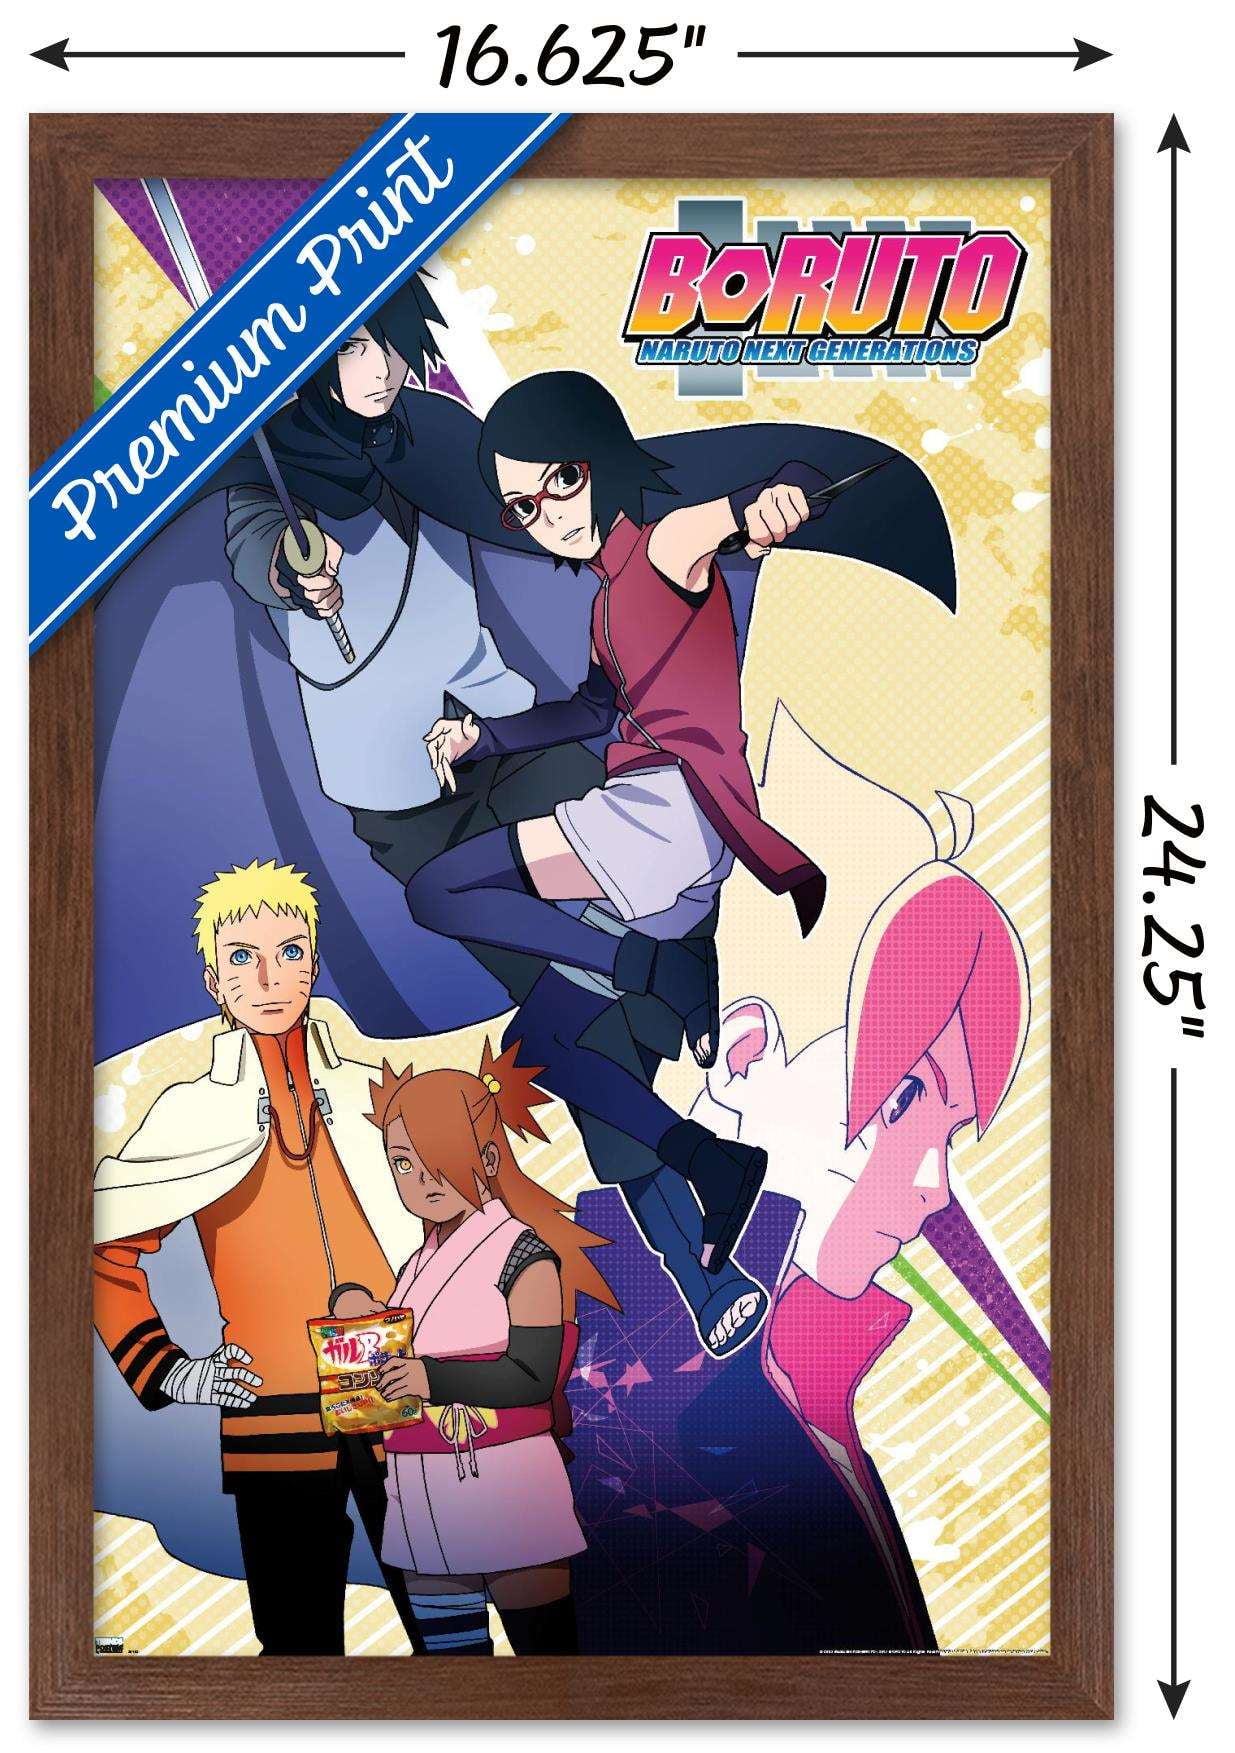 Boruto Naruto the movie Folder icon by Meyer69 on DeviantArt